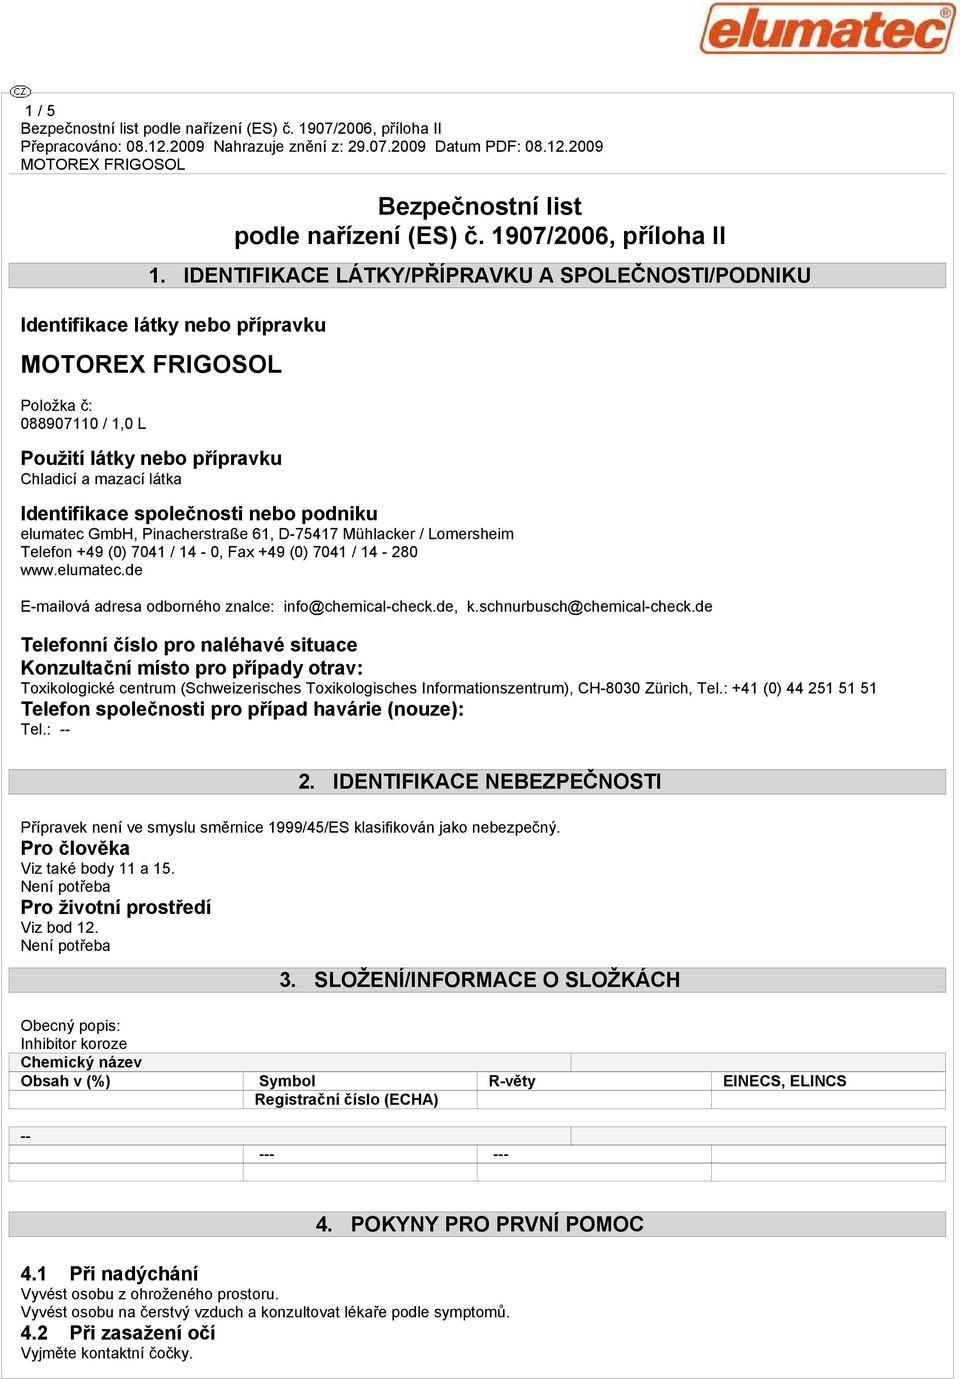 podniku elumatec GmbH, Pinacherstraße 61, D-75417 Mühlacker / Lomersheim Telefon +49 (0) 7041 / 14-0, Fax +49 (0) 7041 / 14-280 www.elumatec.de E-mailová adresa odborného znalce: info@chemical-check.